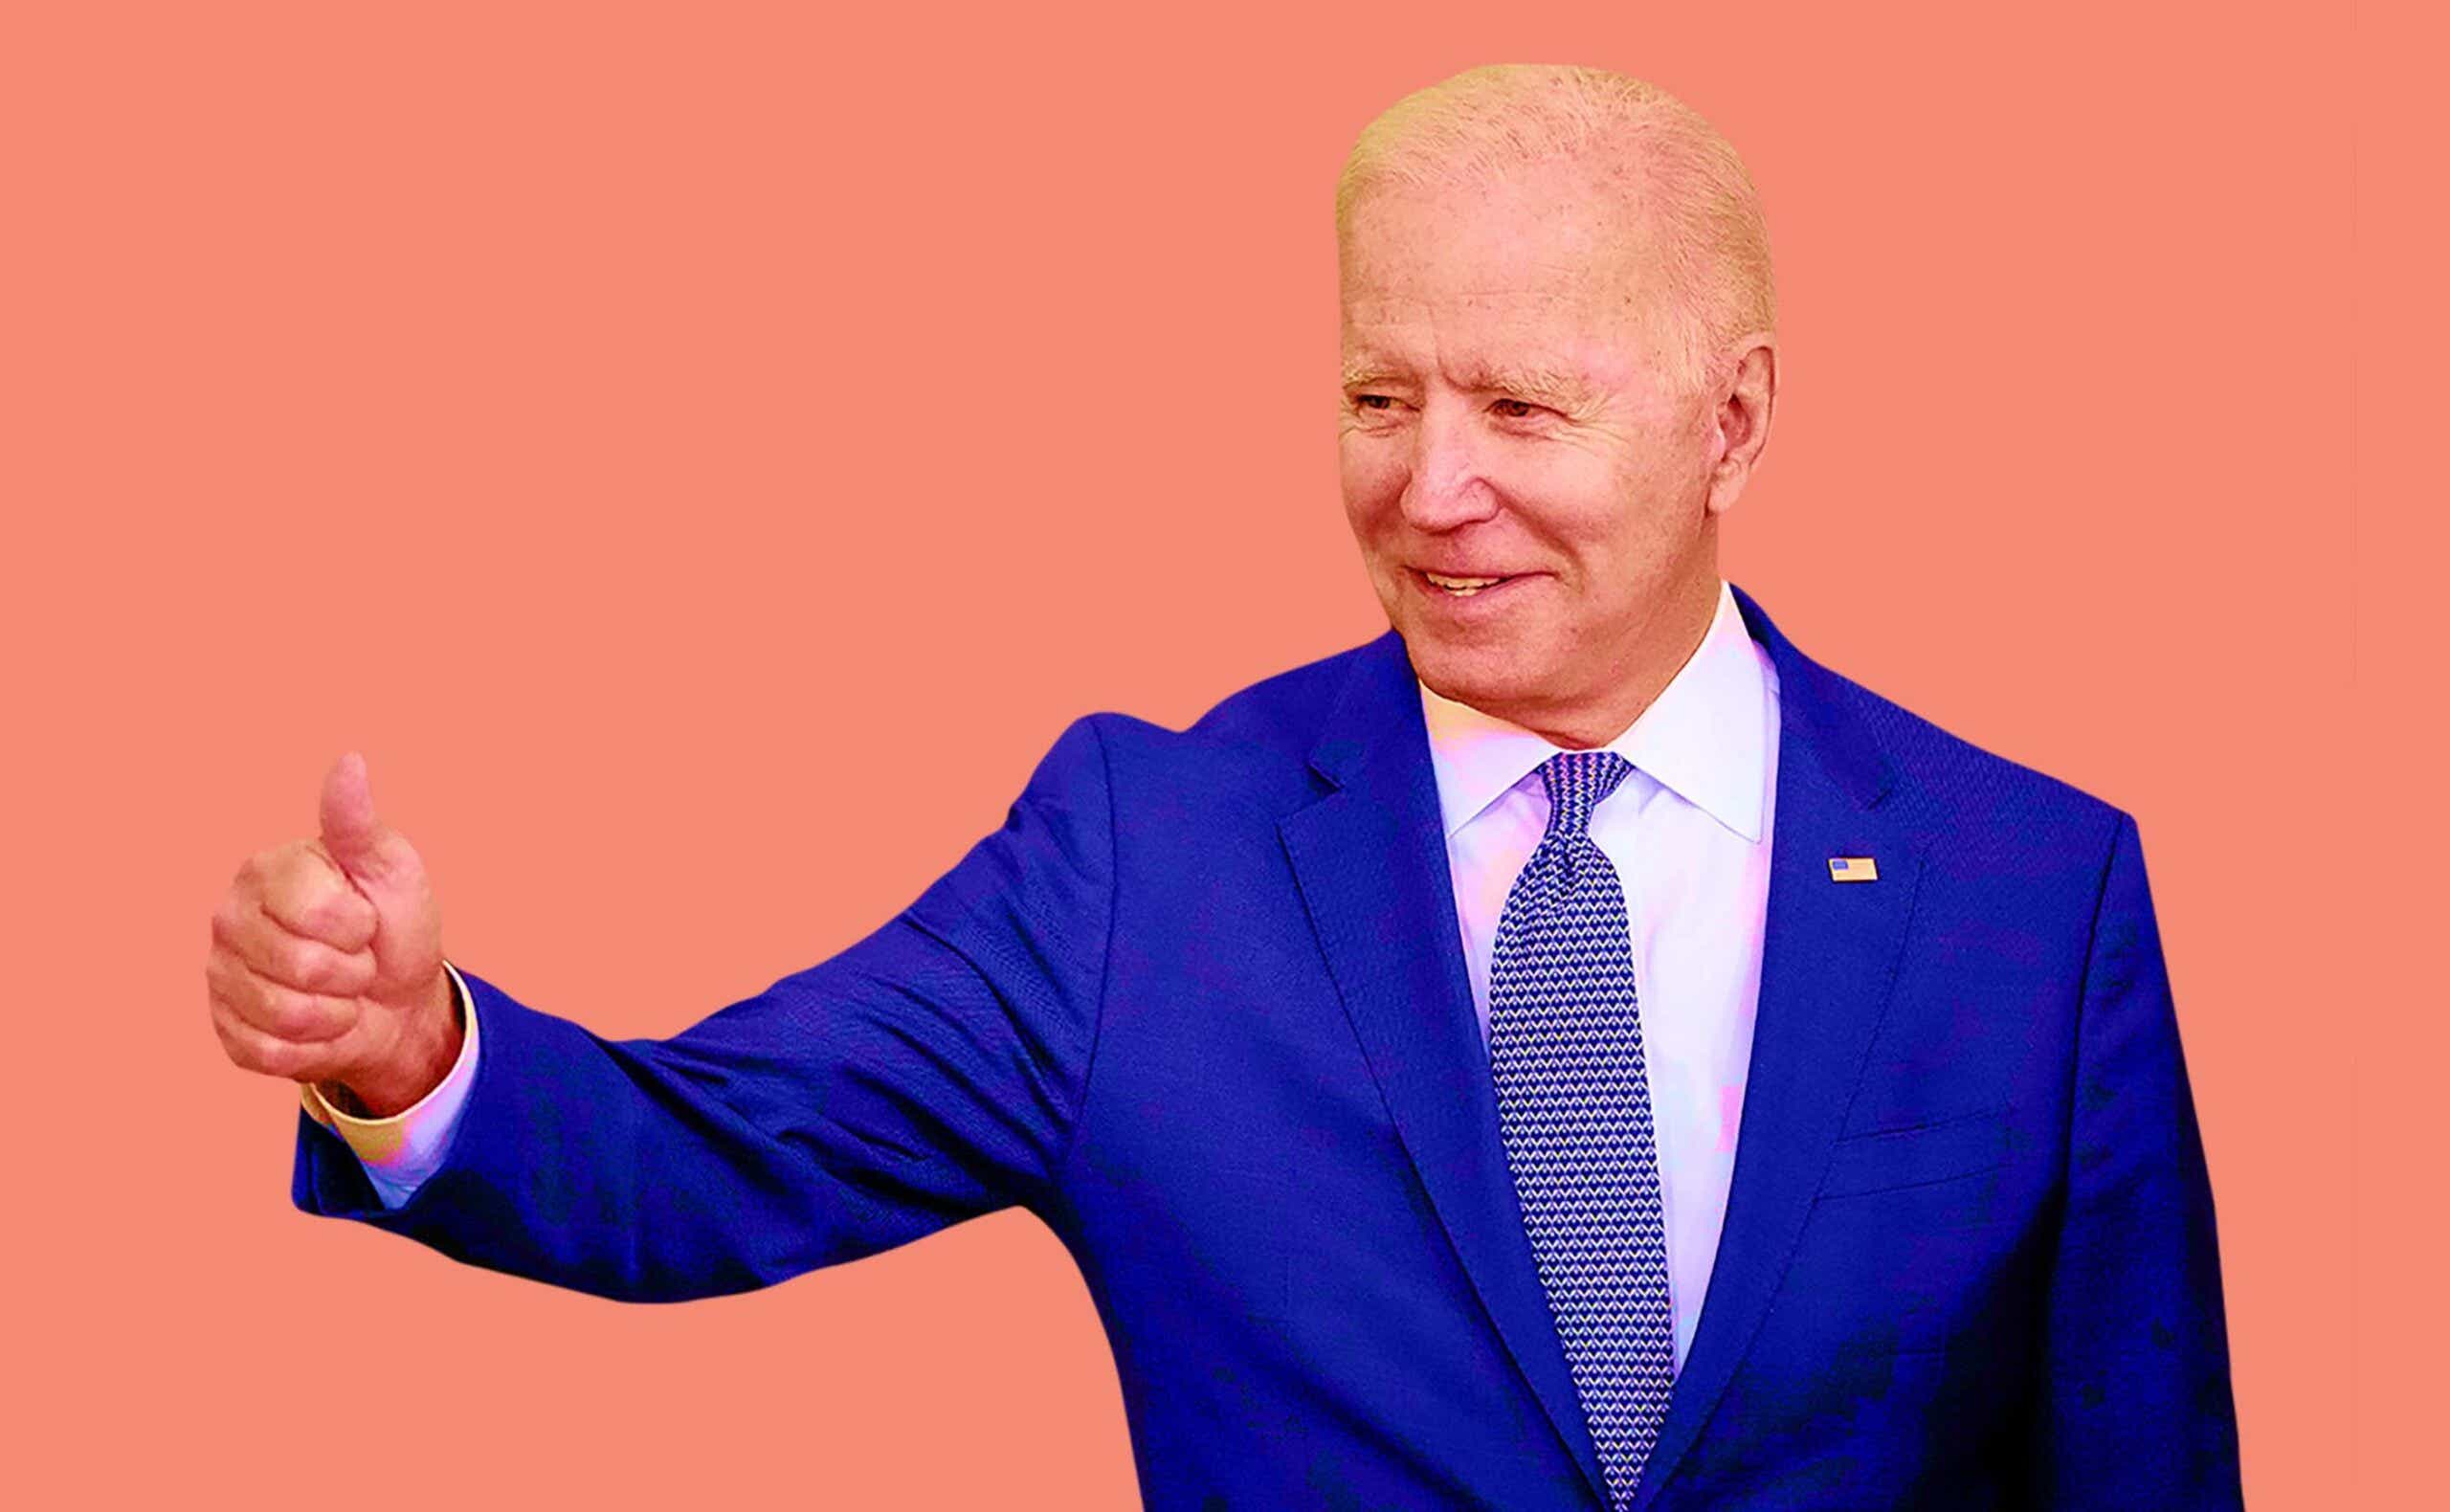 Joe Biden giving the thumbs up